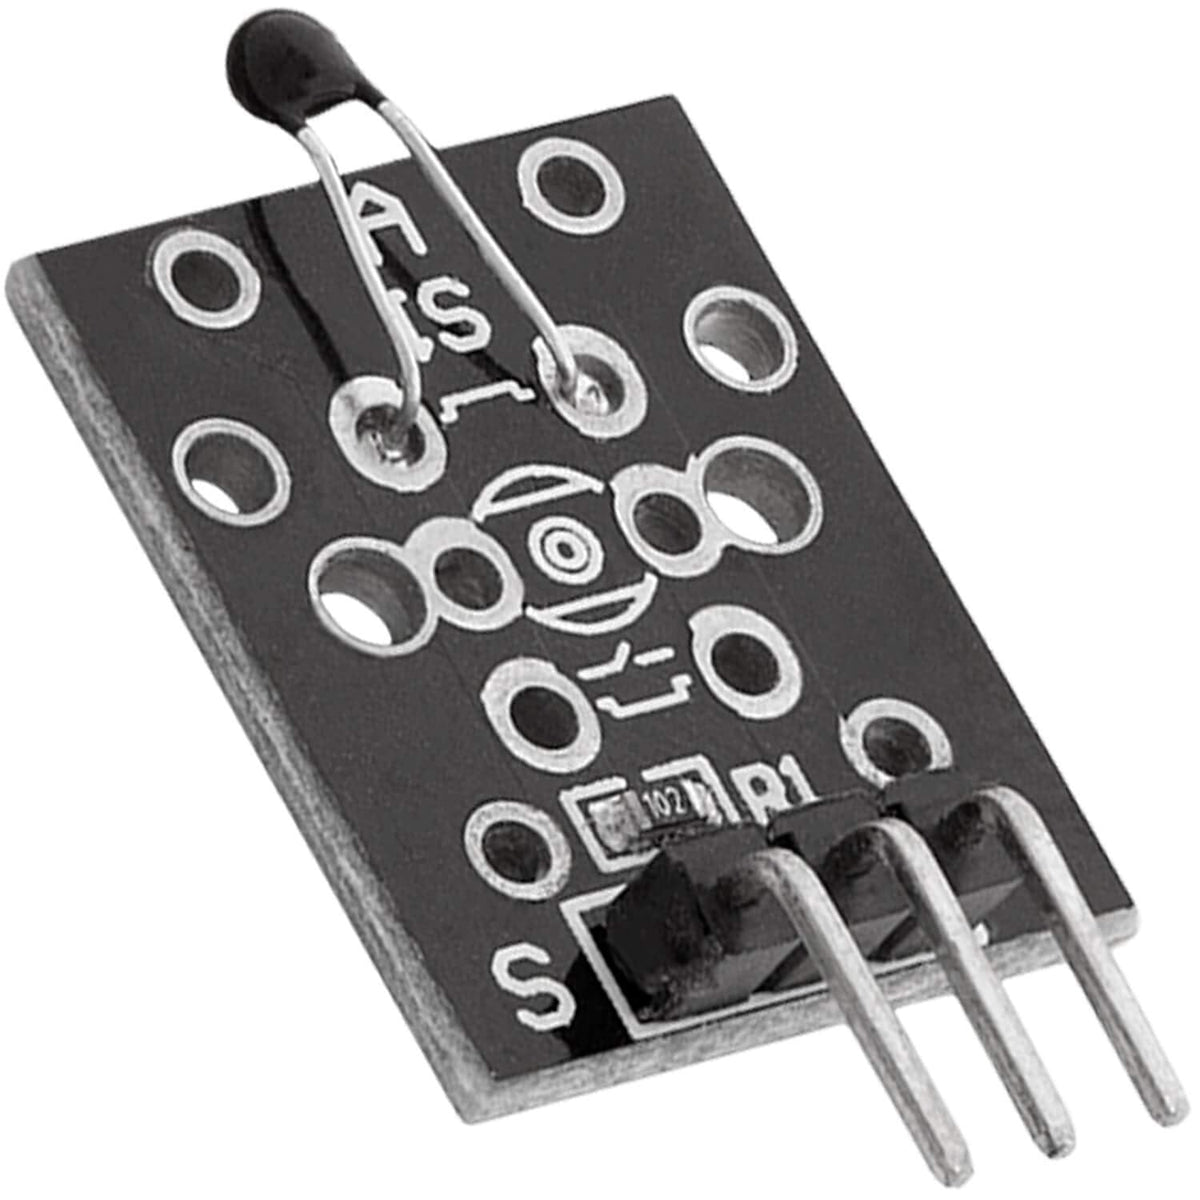 Analog Temperature Sensor Module 3.3V 5V Thermistor Compatible With Arduino